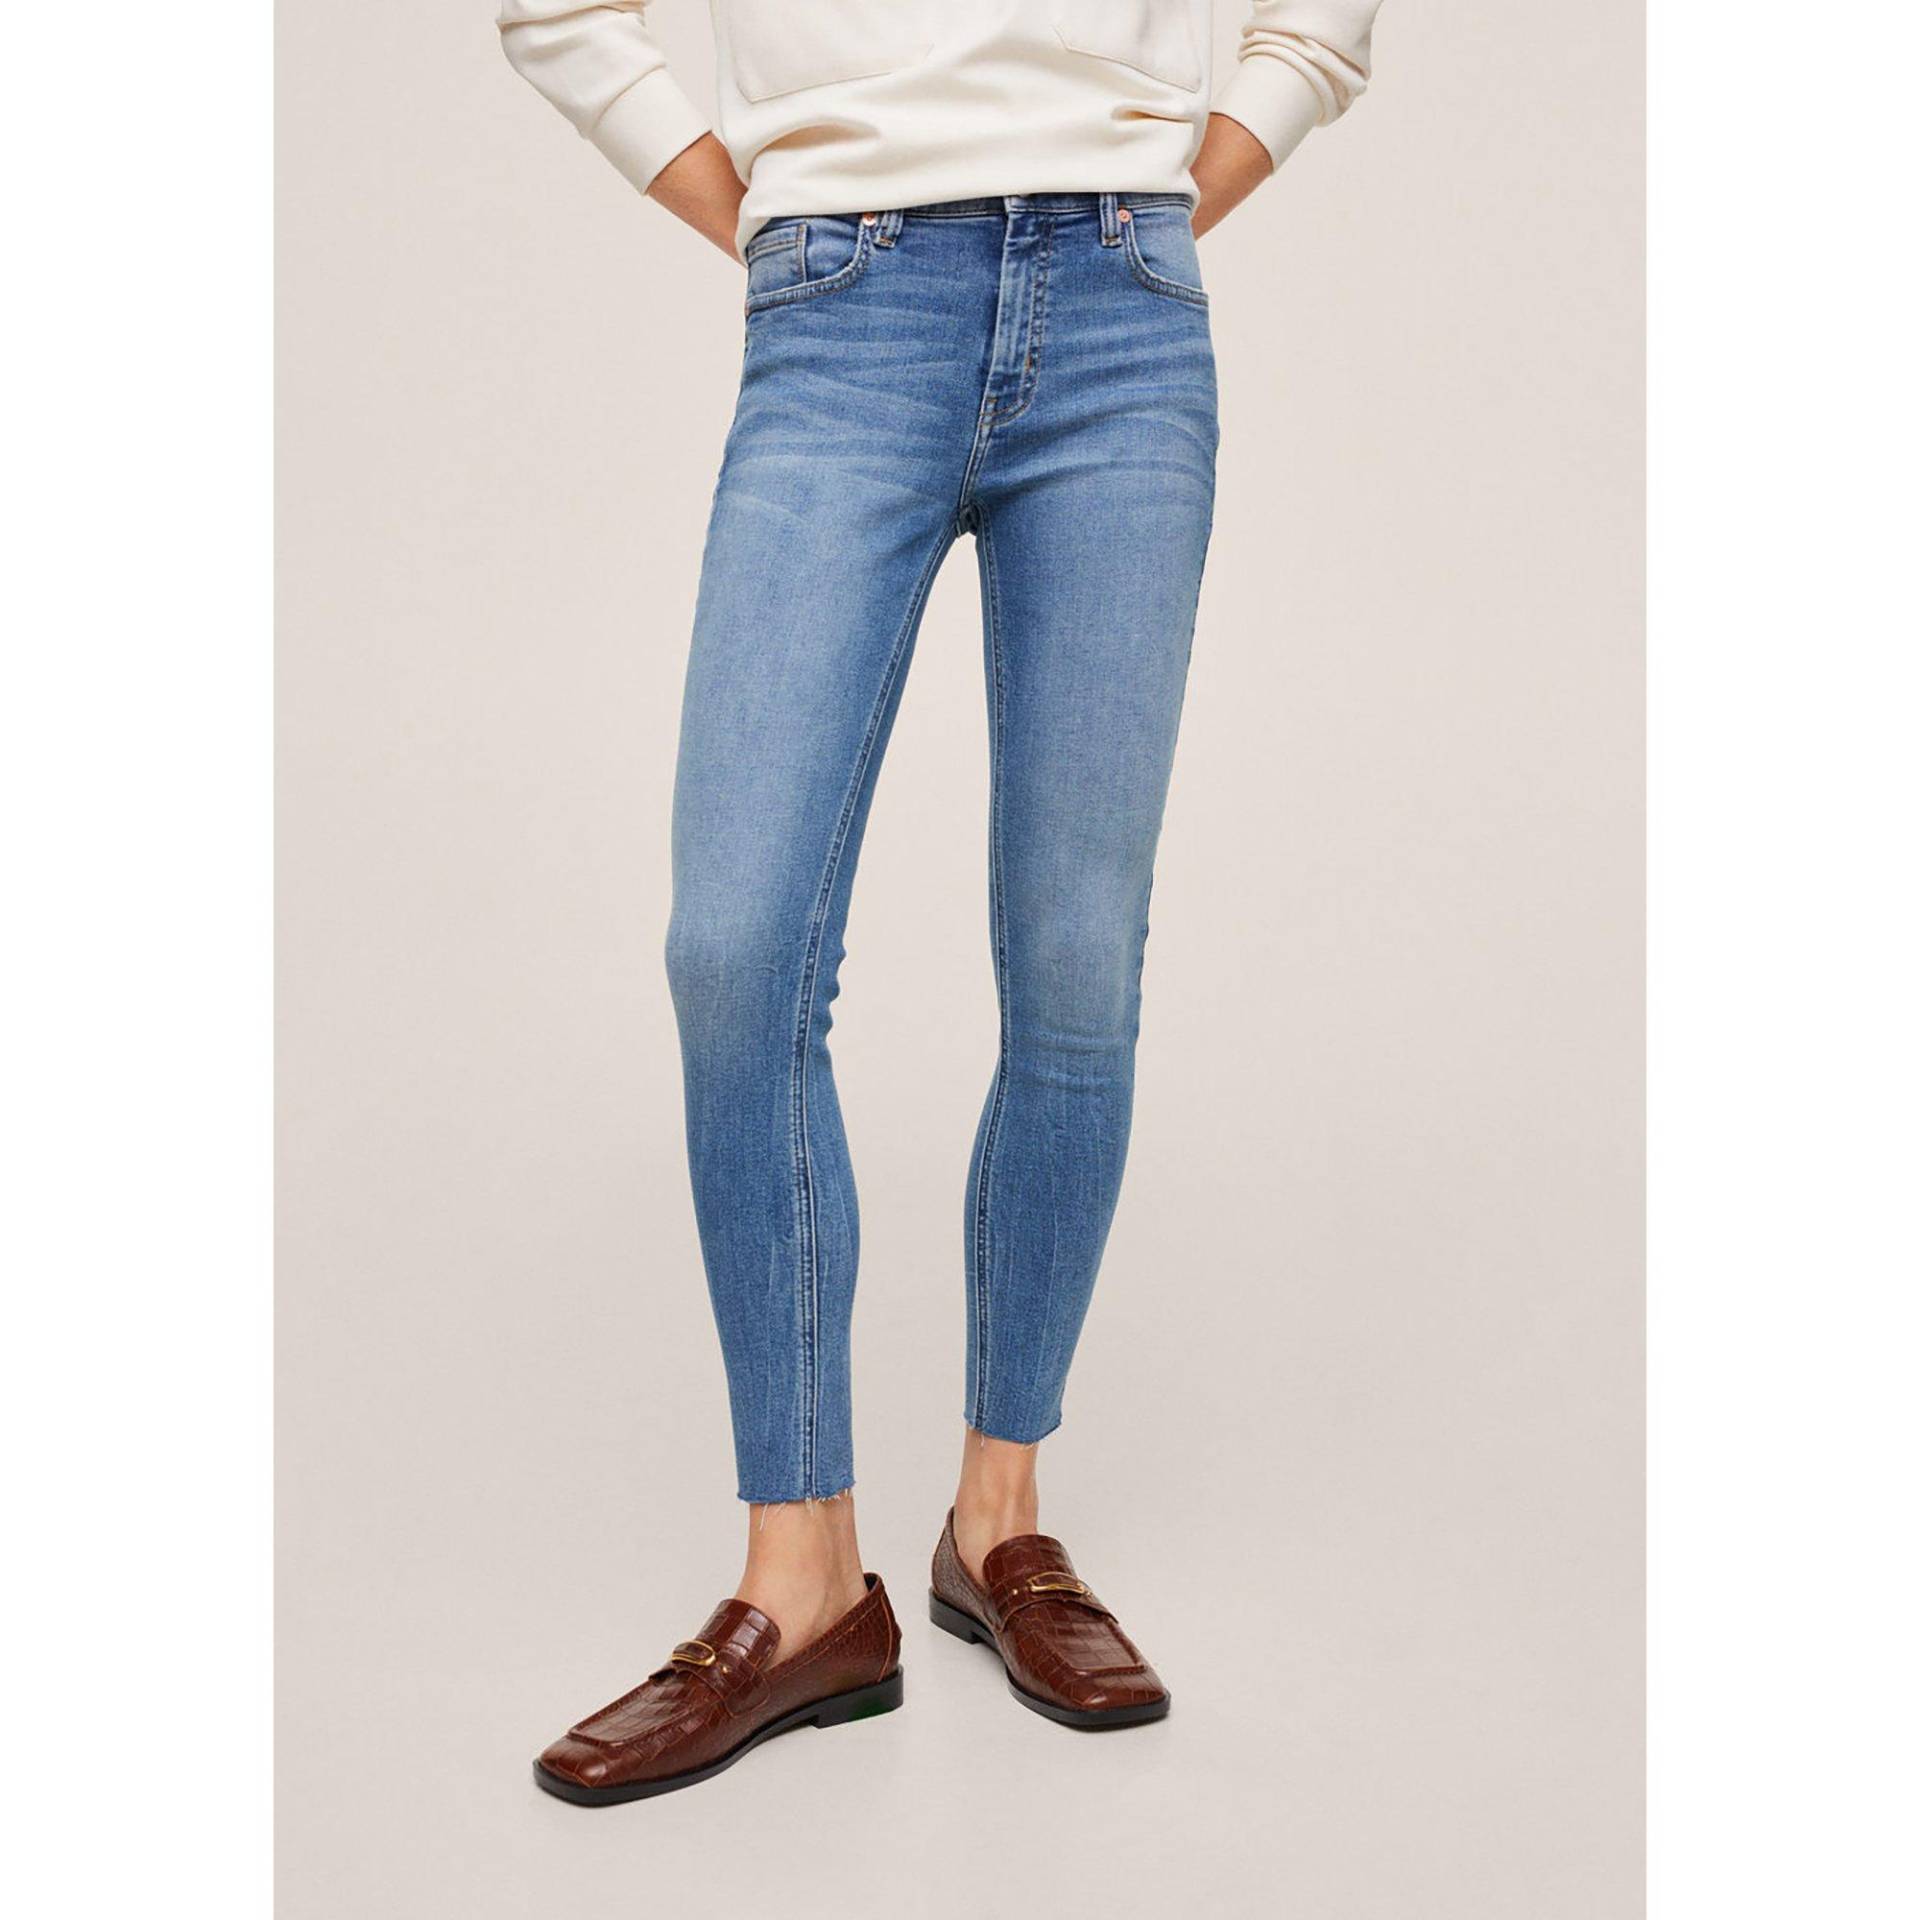 Jeans, Skinny Fit Damen Blau  46 von MANGO